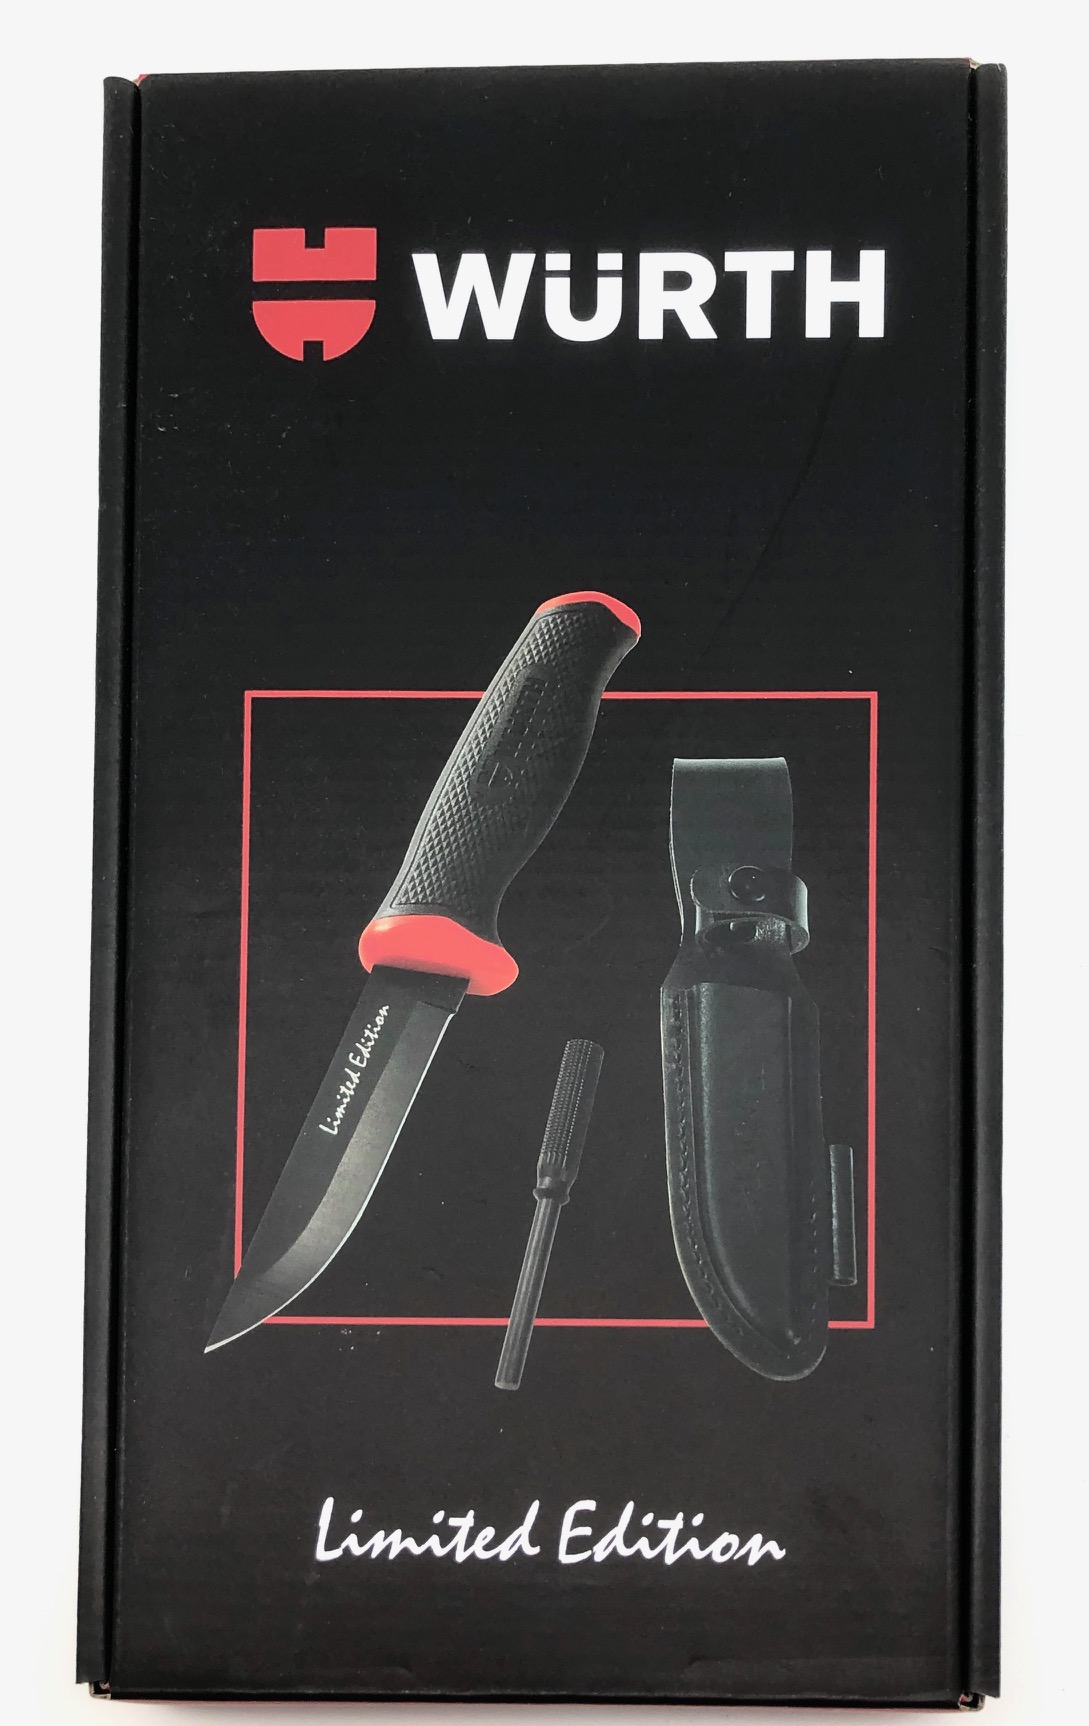 Würth Limited Edition Outdoor 2K- Messer